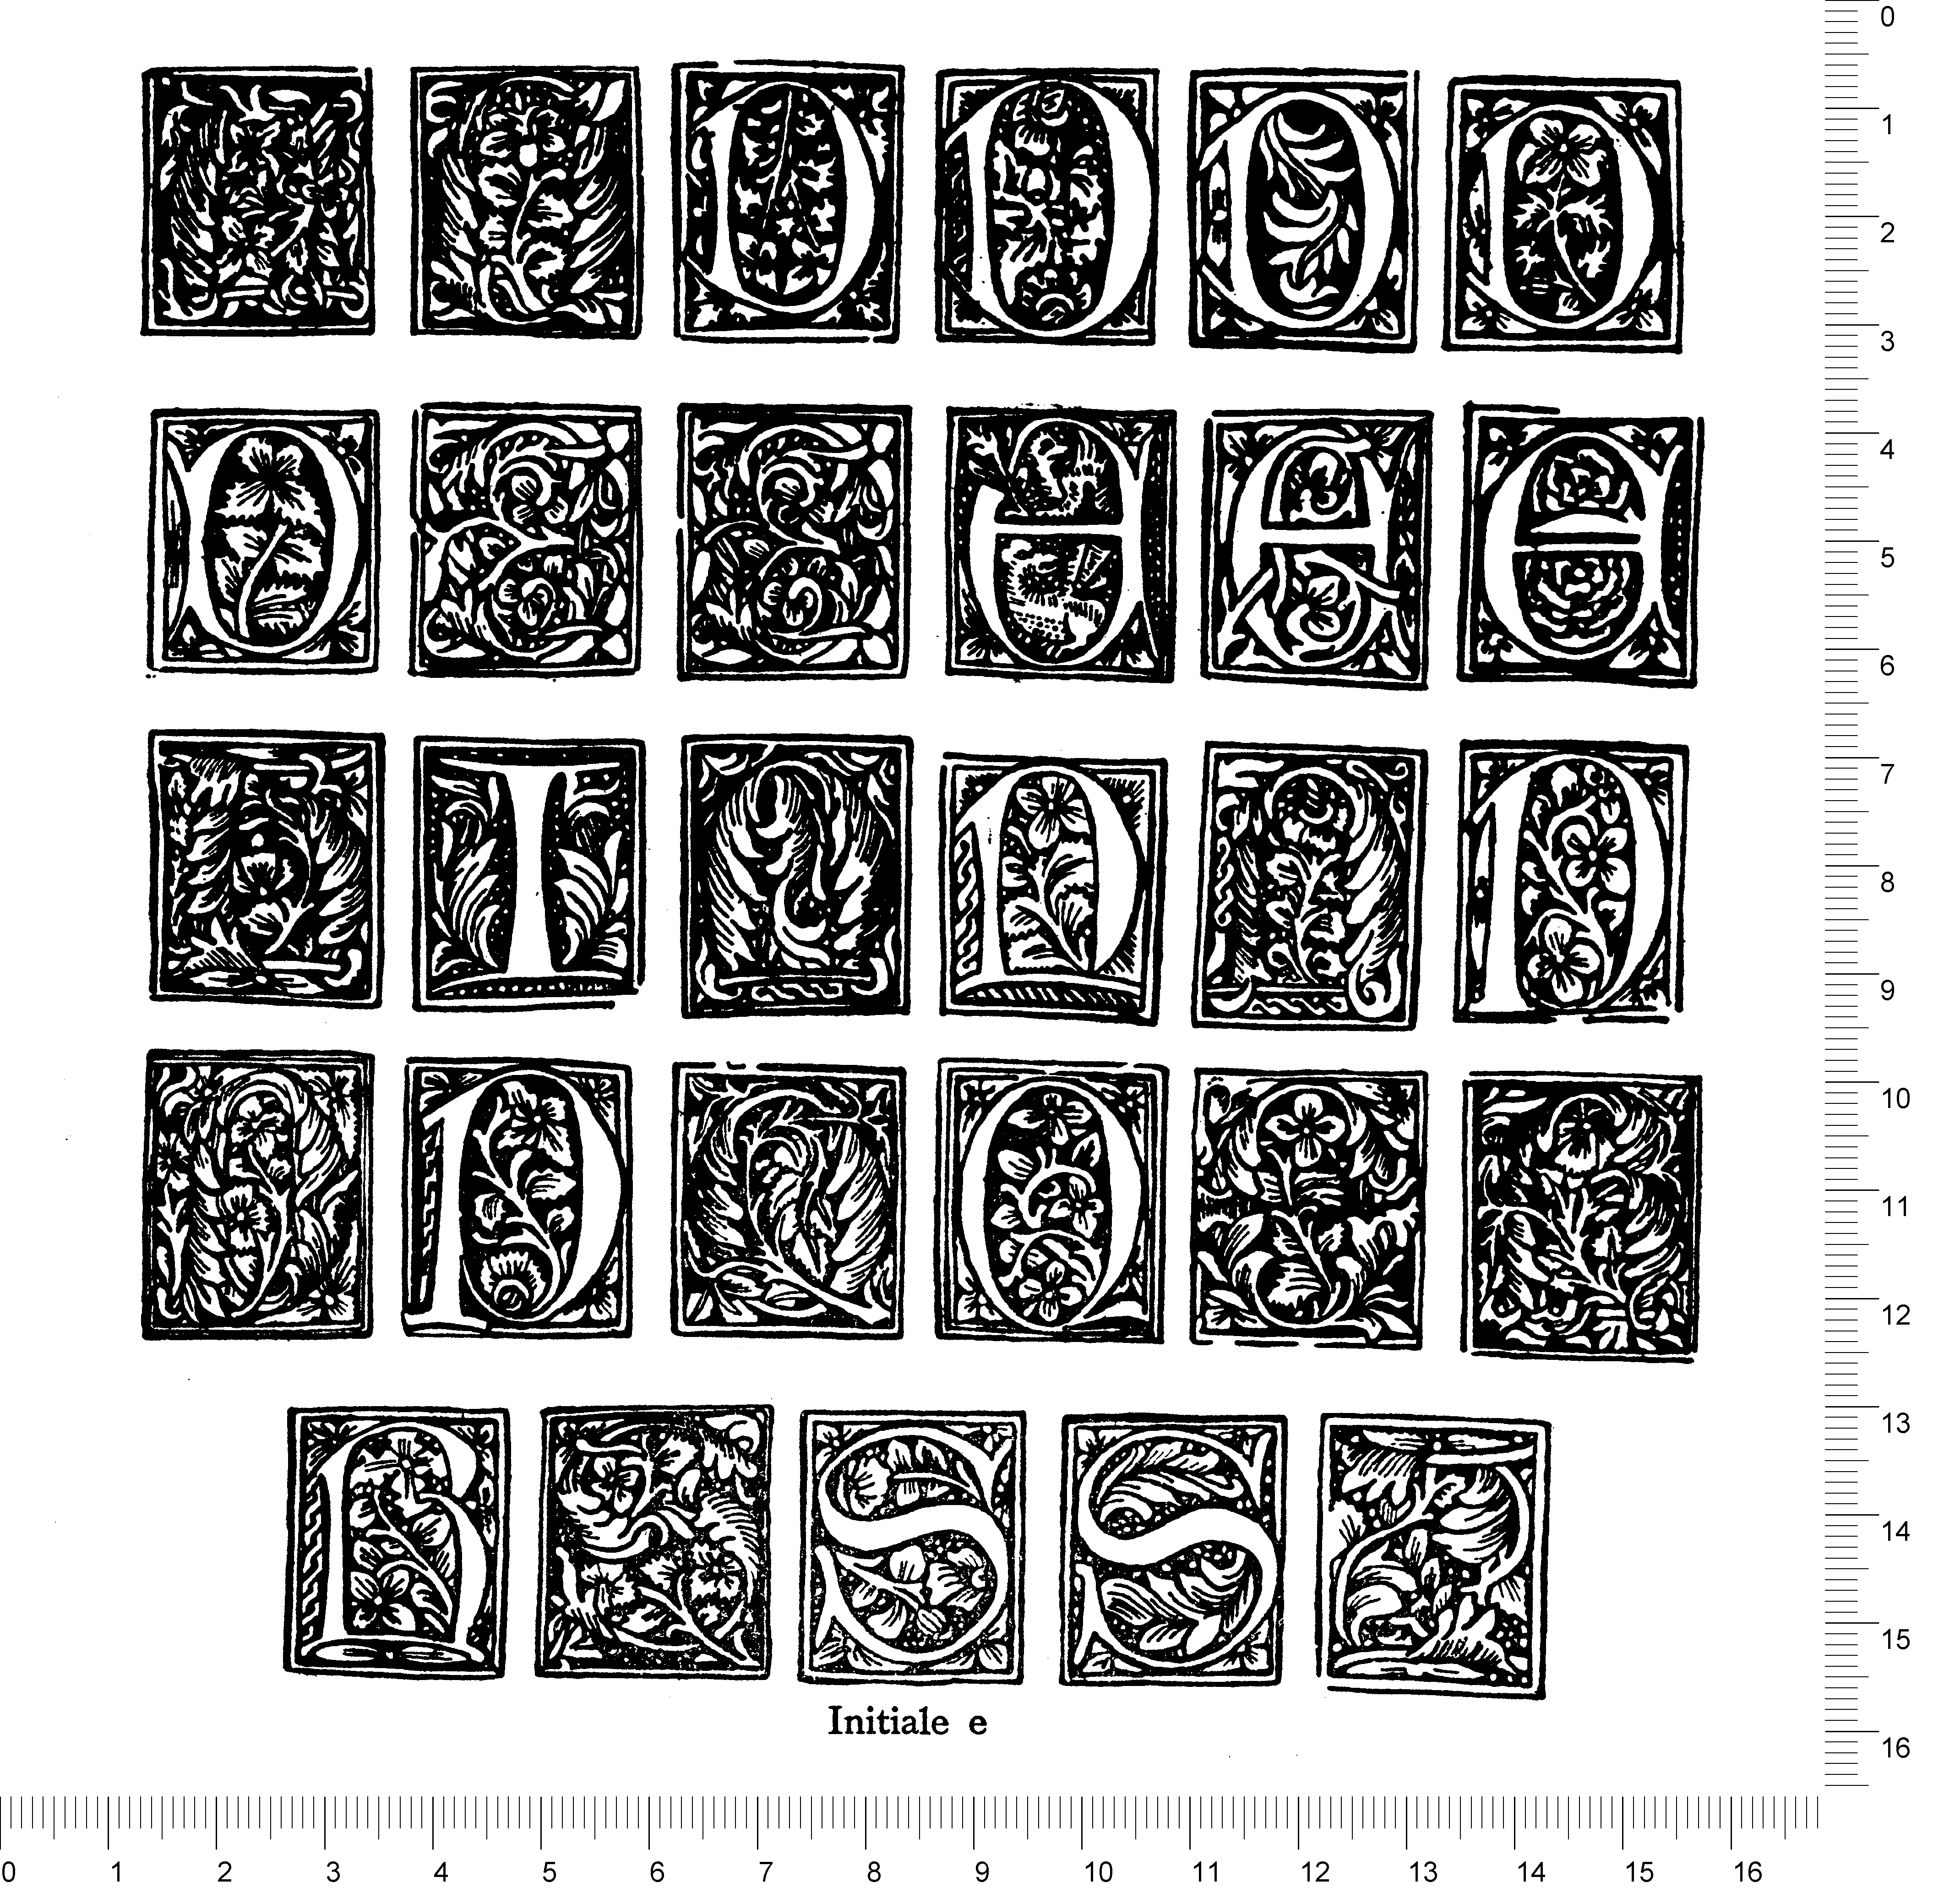 Abbildung der GfT-Tafeln vonGfT1445.2